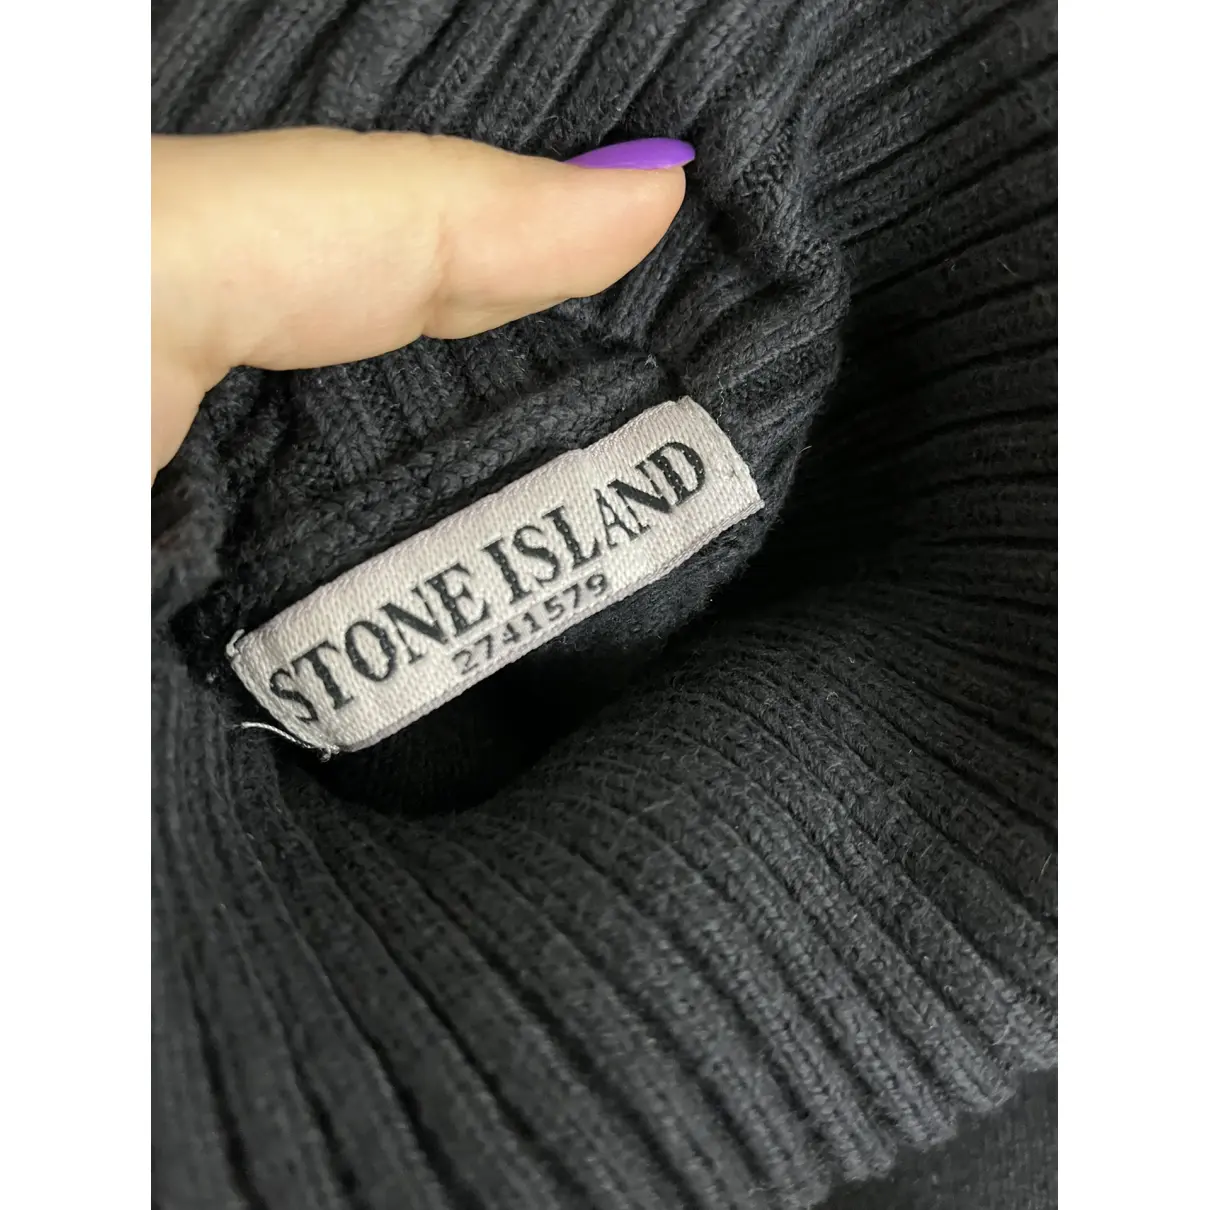 Buy Stone Island Pull online